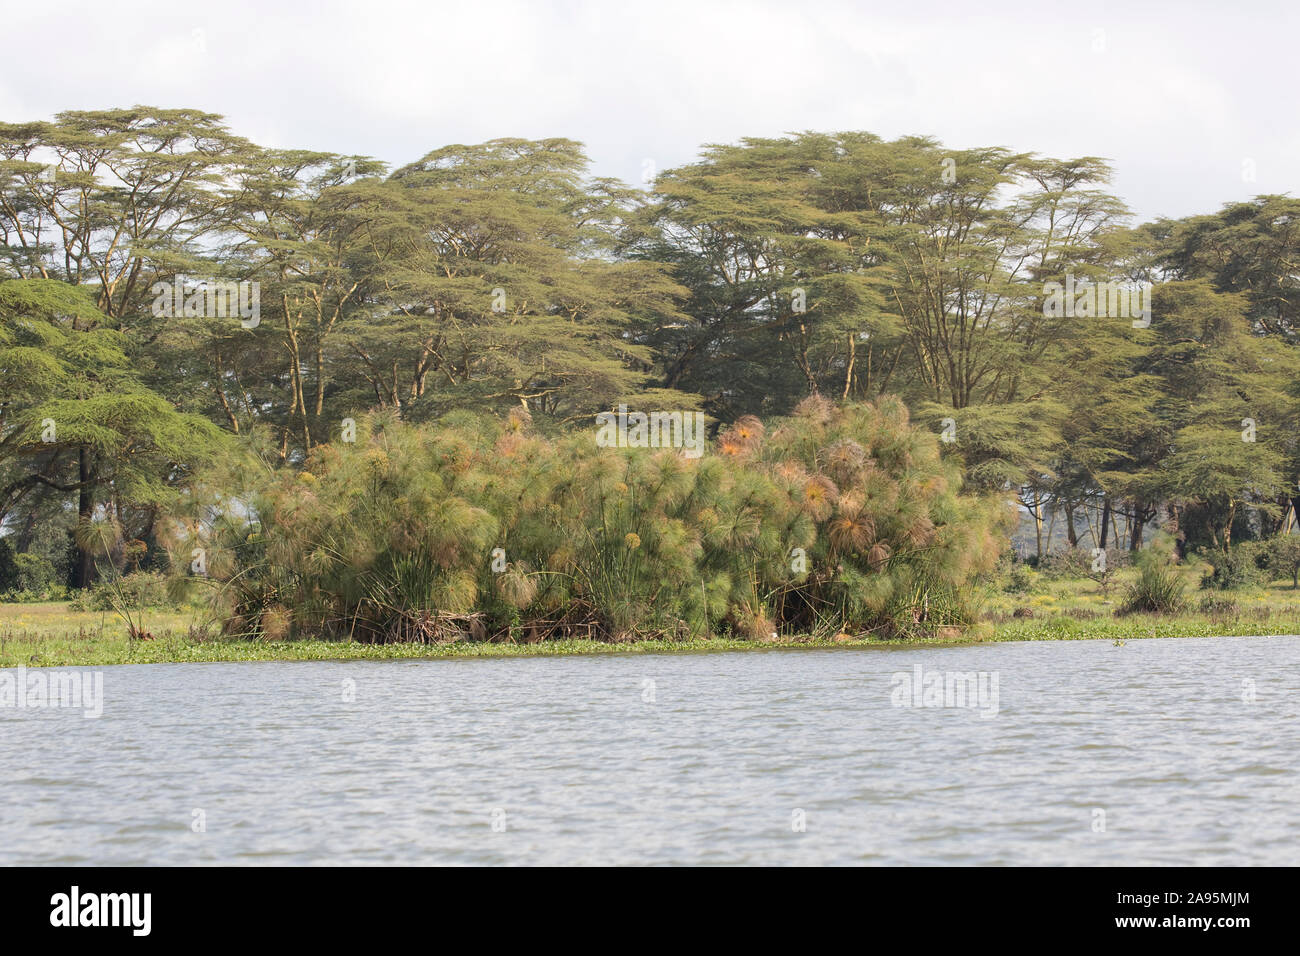 Il papiro, cyperus papyrus e ripariali bosco di acacia, Lake Naivasha, Kenya Foto Stock